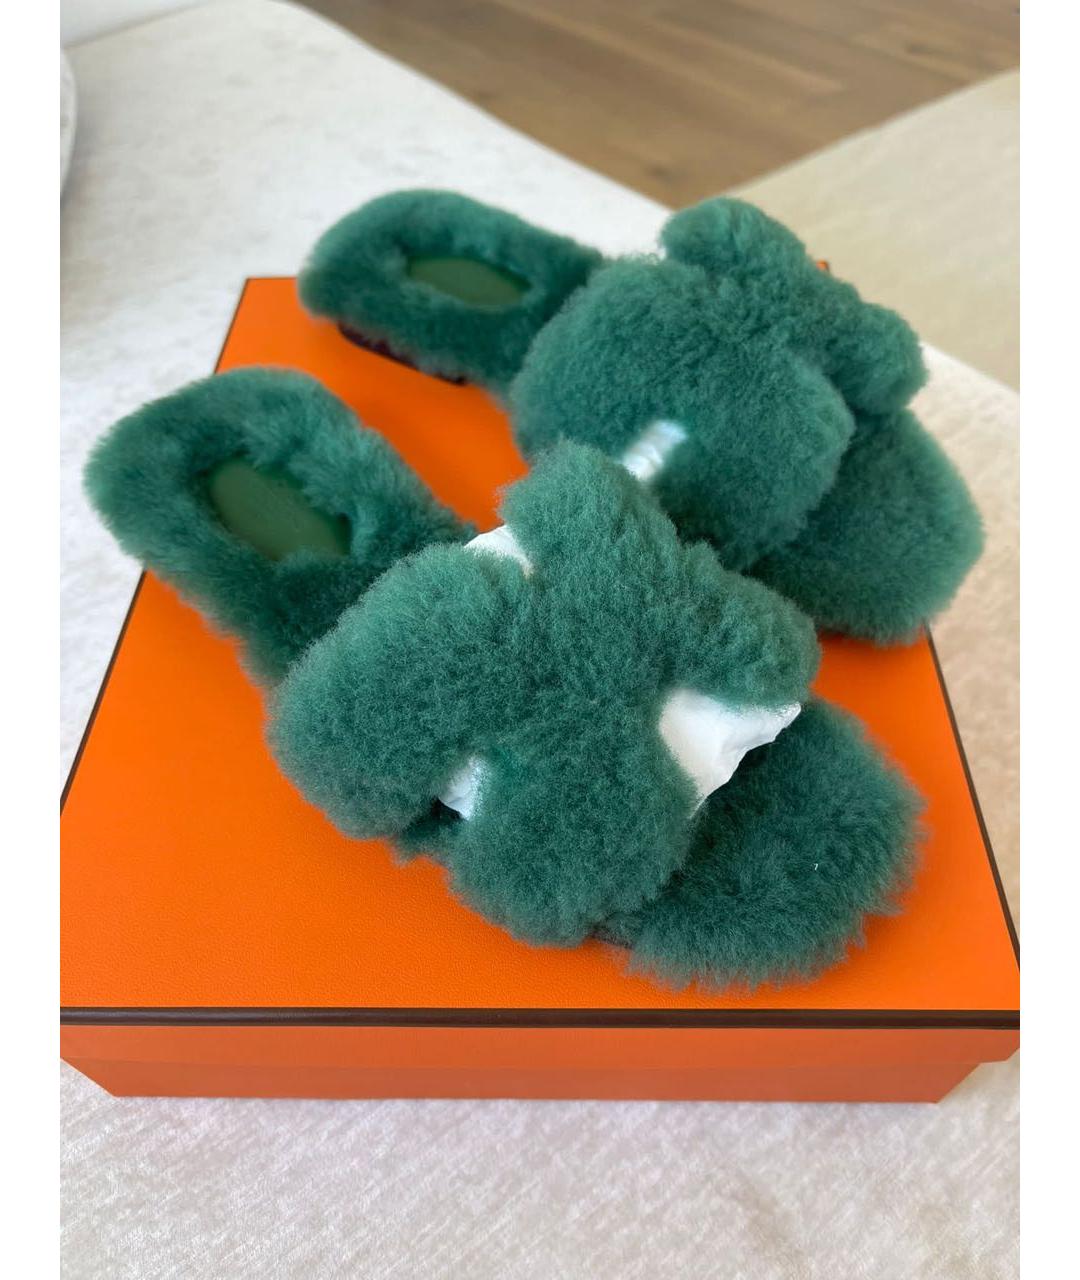 HERMES PRE-OWNED Зеленые кожаные сандалии, фото 3